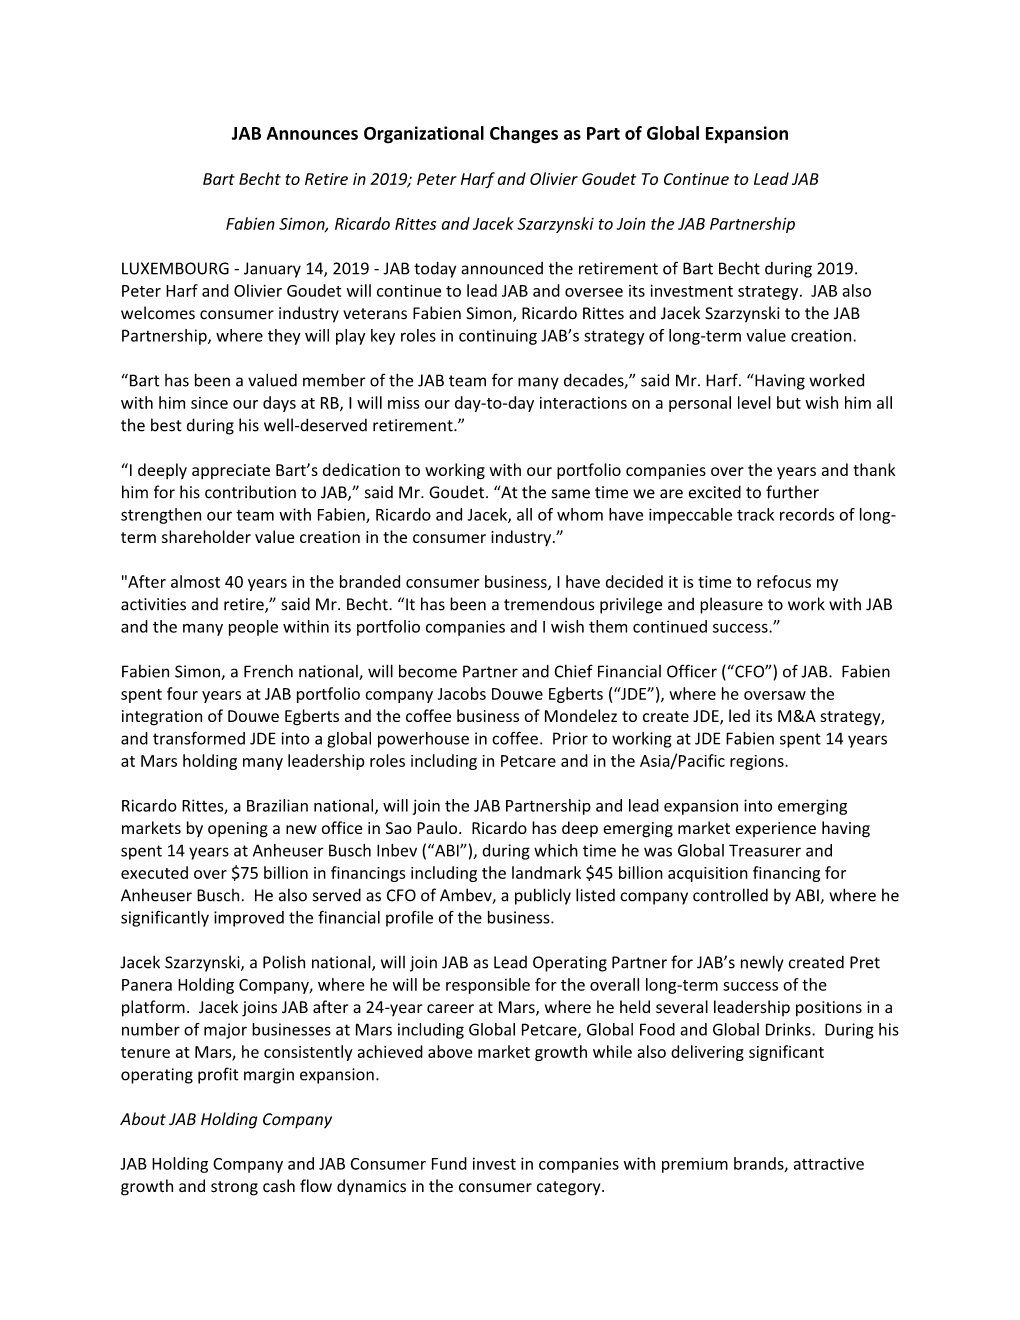 Press Release JAB Organizational Changes